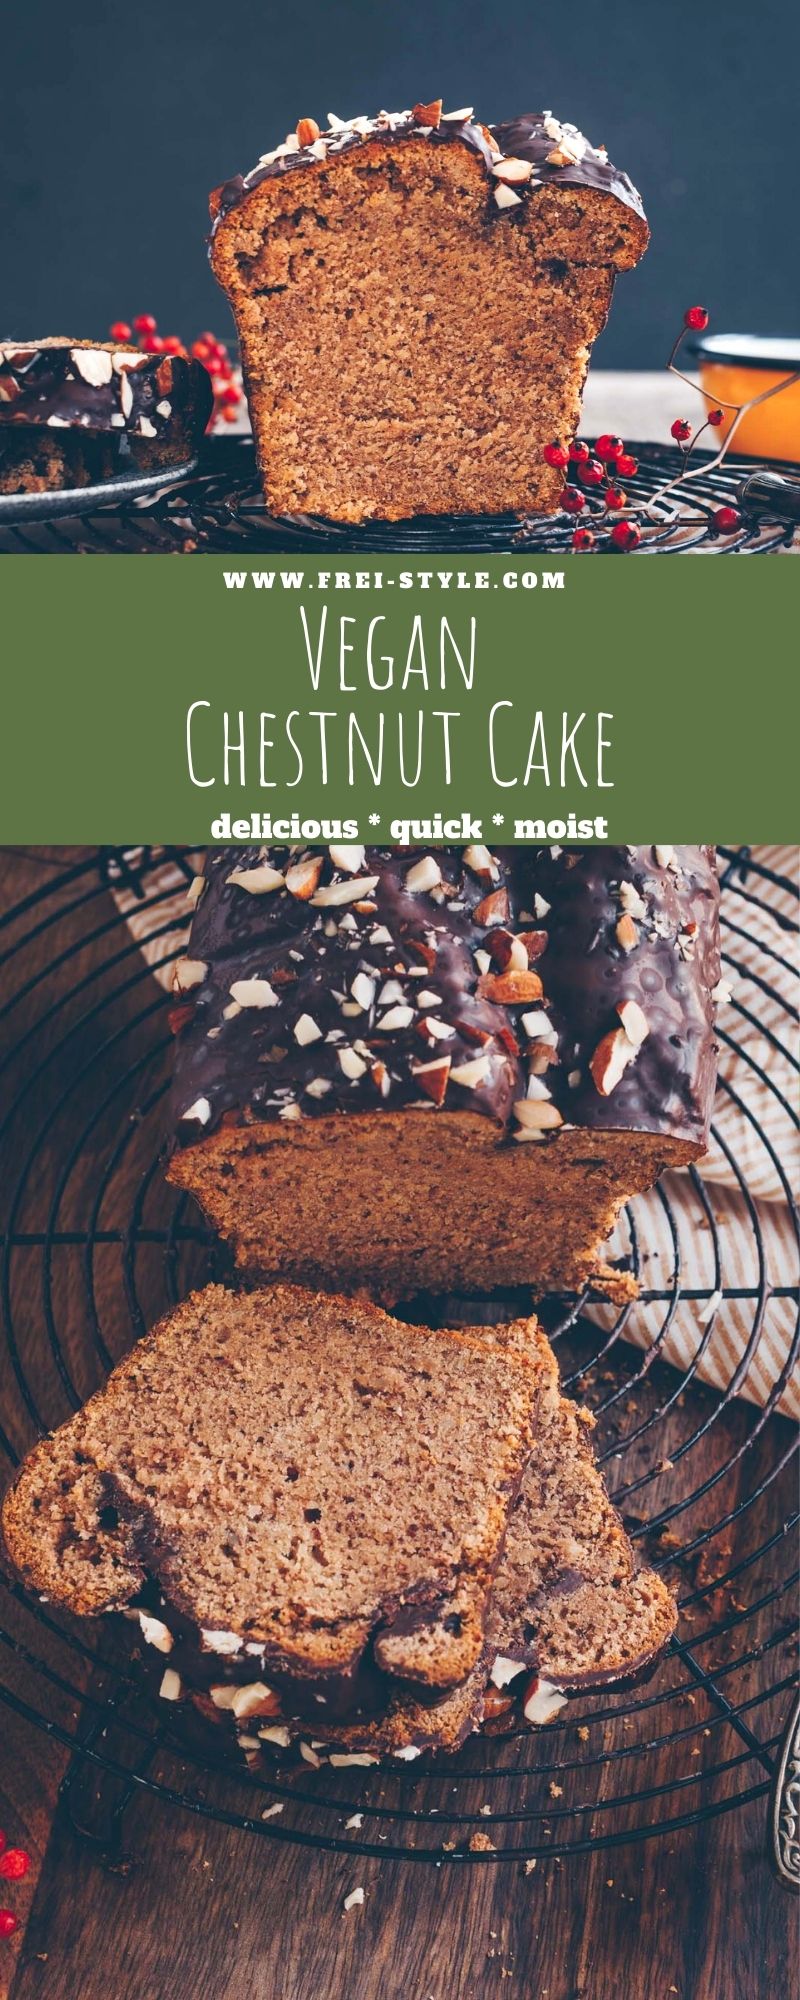 Vegan Chestnut Cake